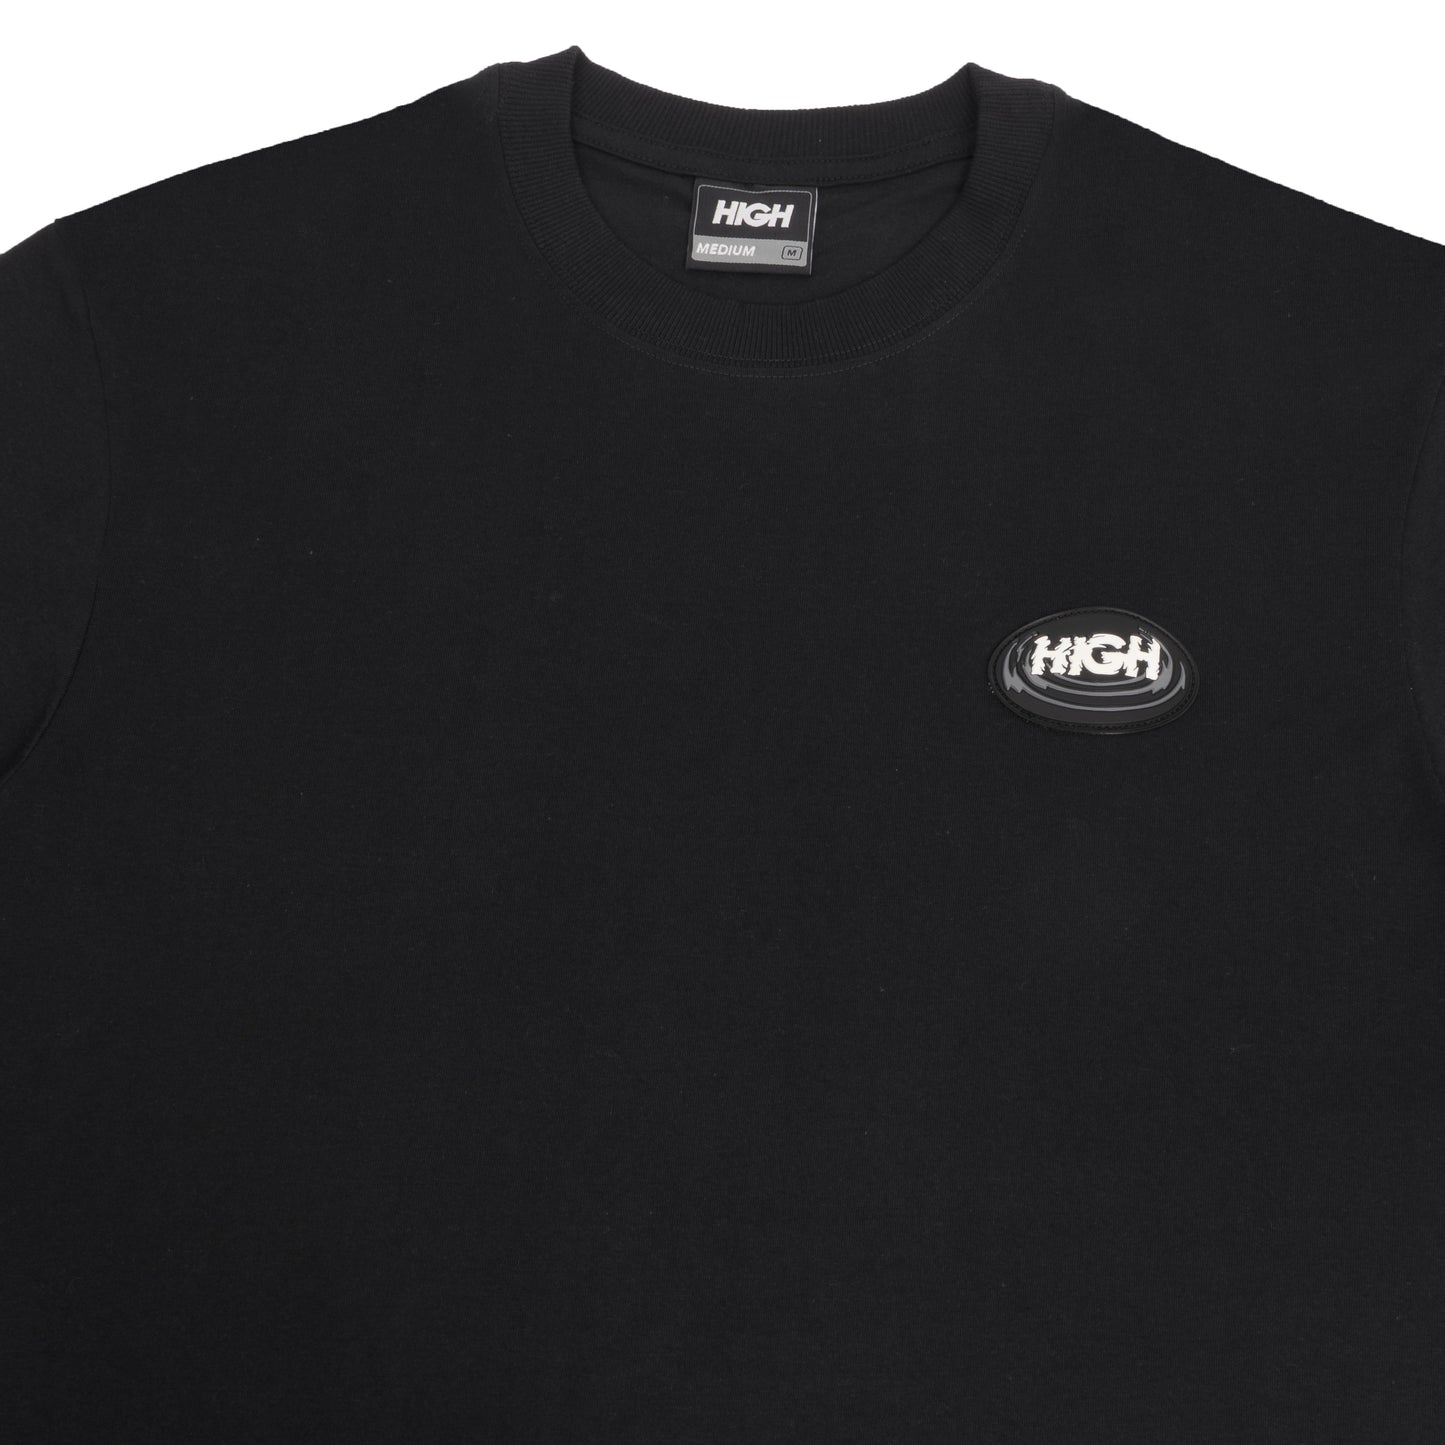 HIGH - Camiseta Hypnosis Black